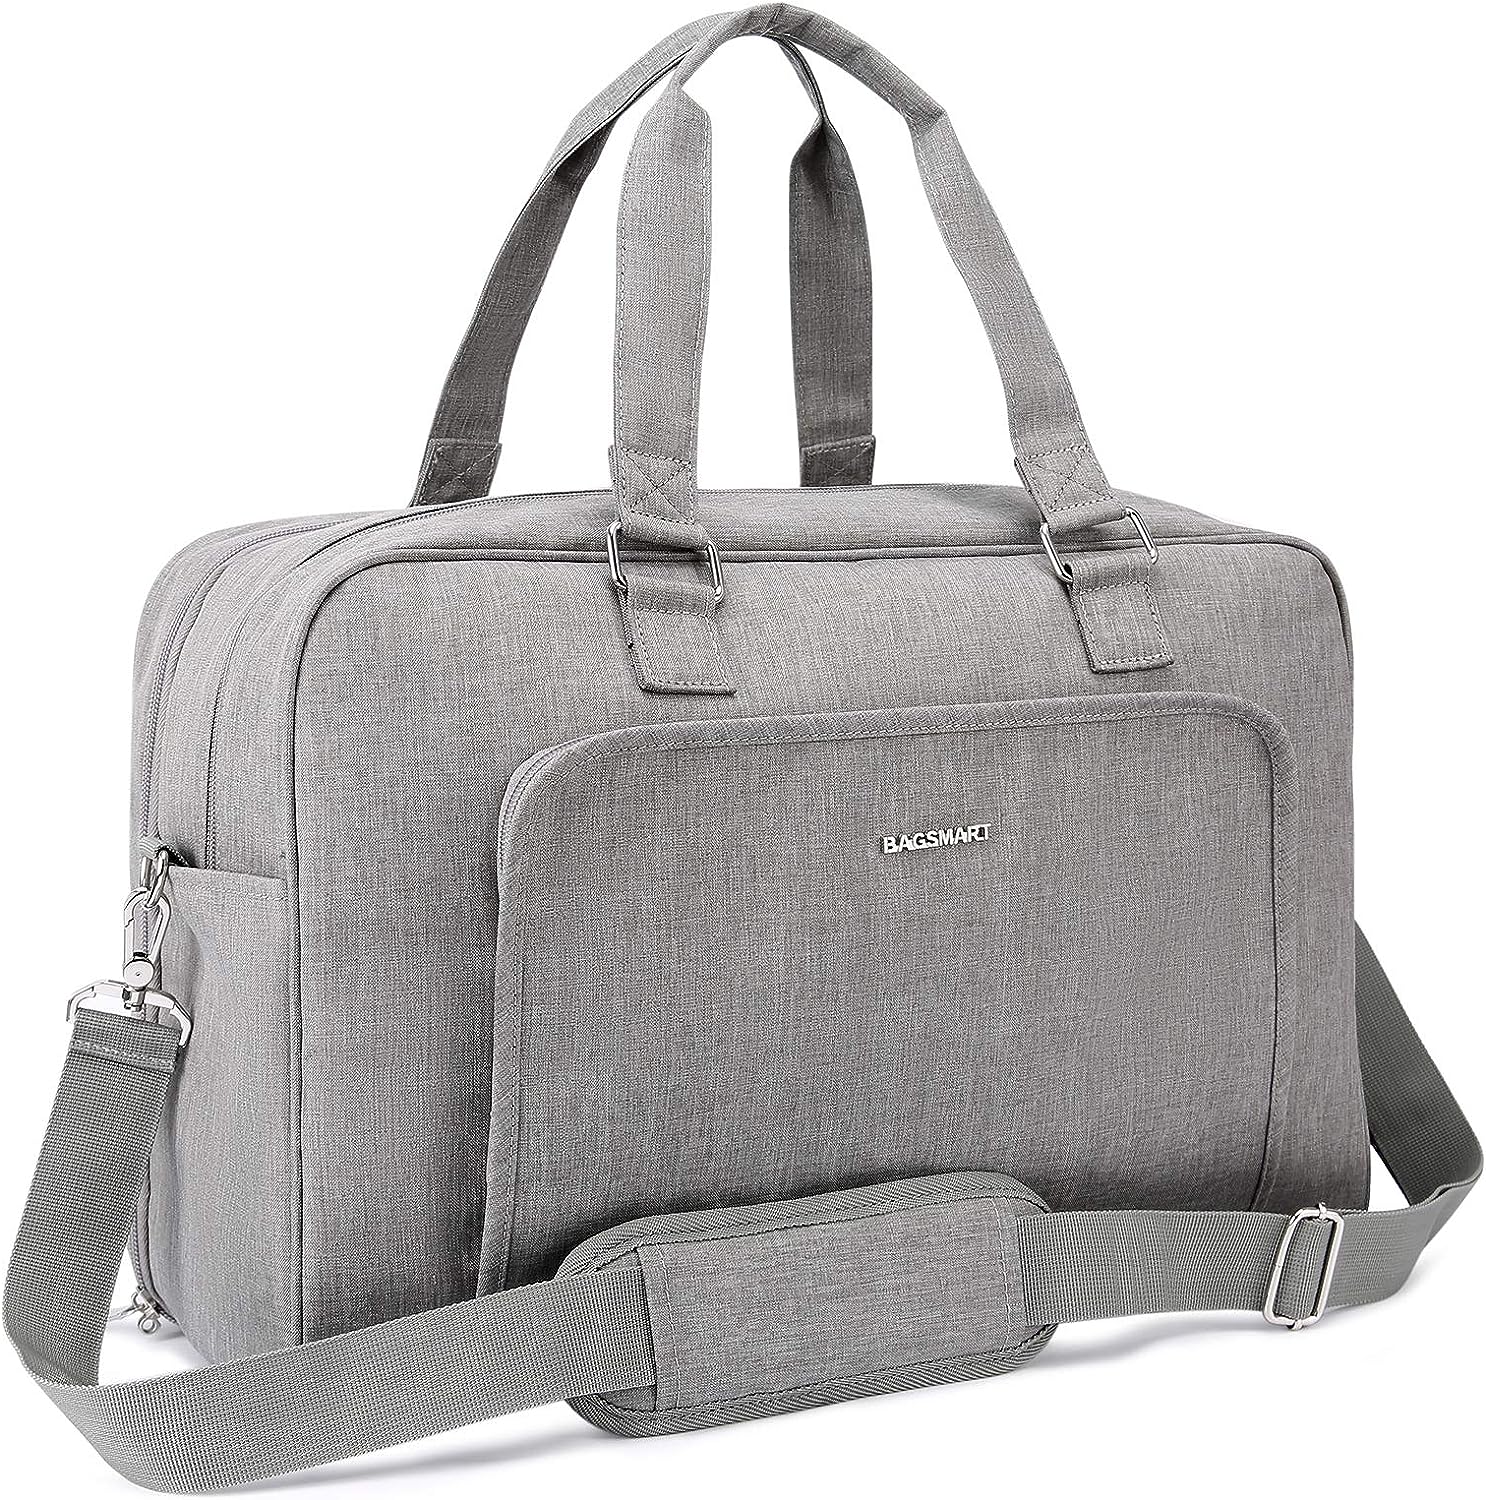 BAGSMART Duffle Bag Large Weekender Overnight Bag with [...]